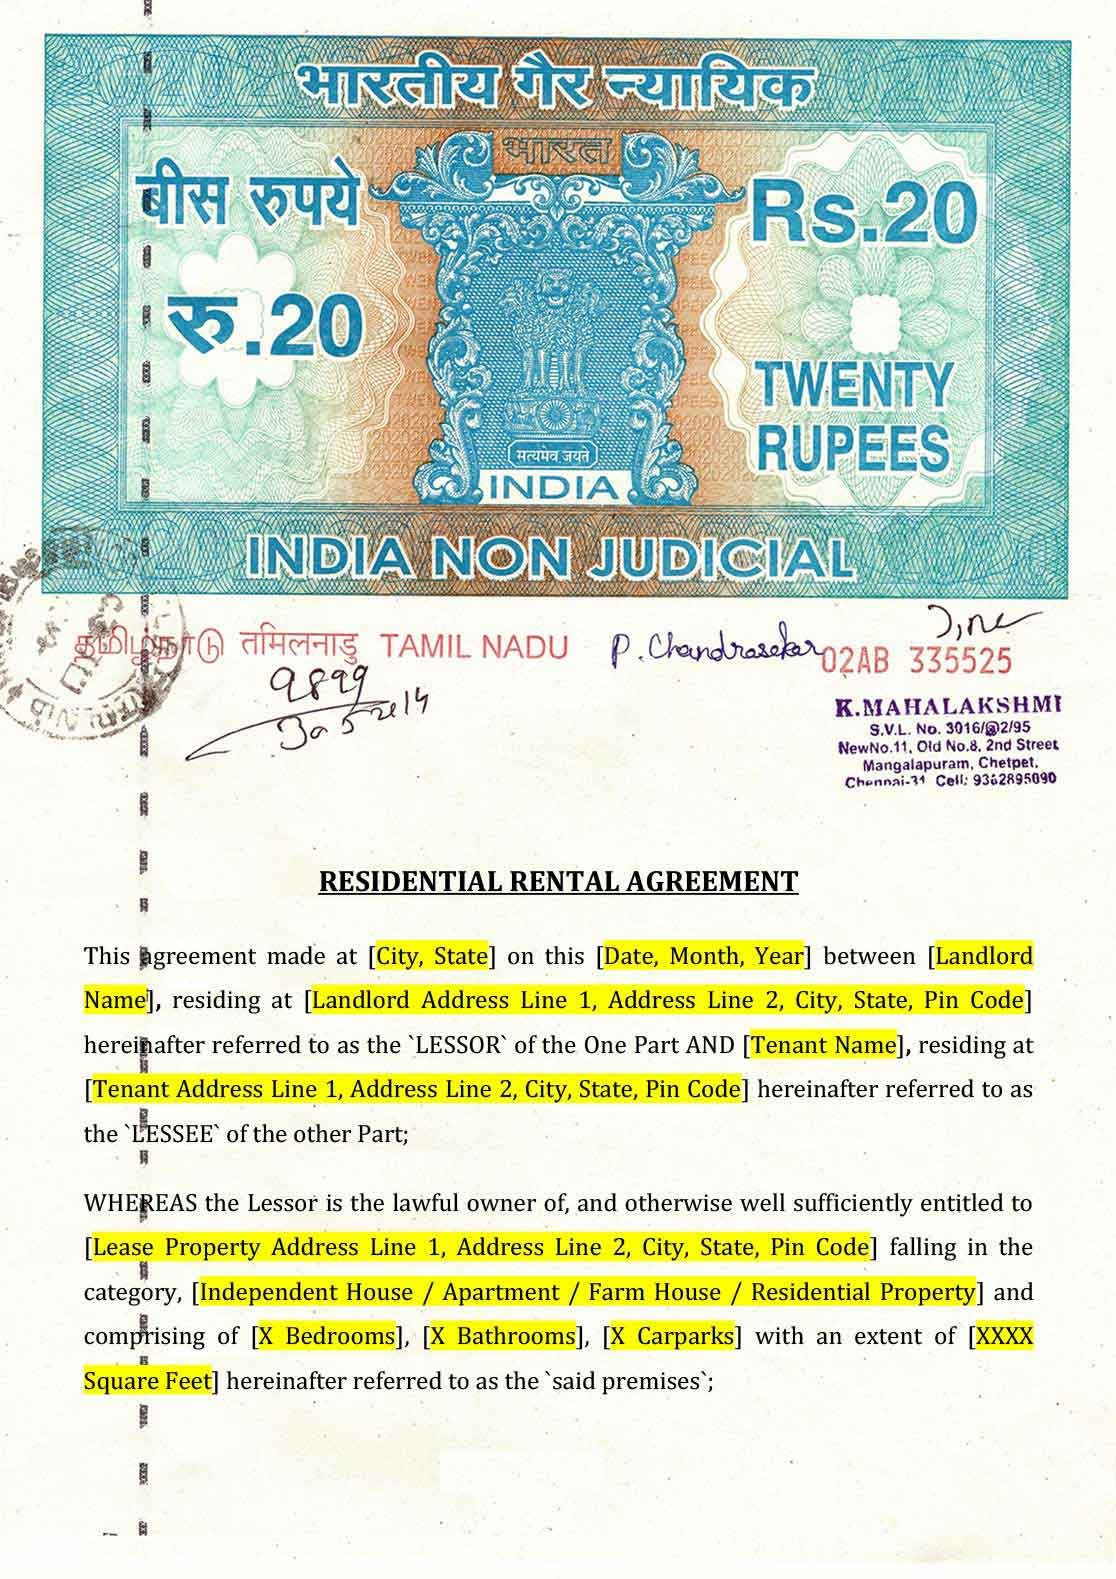 Bond Purchase Agreement Sample Rental Agreement Format Indiafilings Document Center